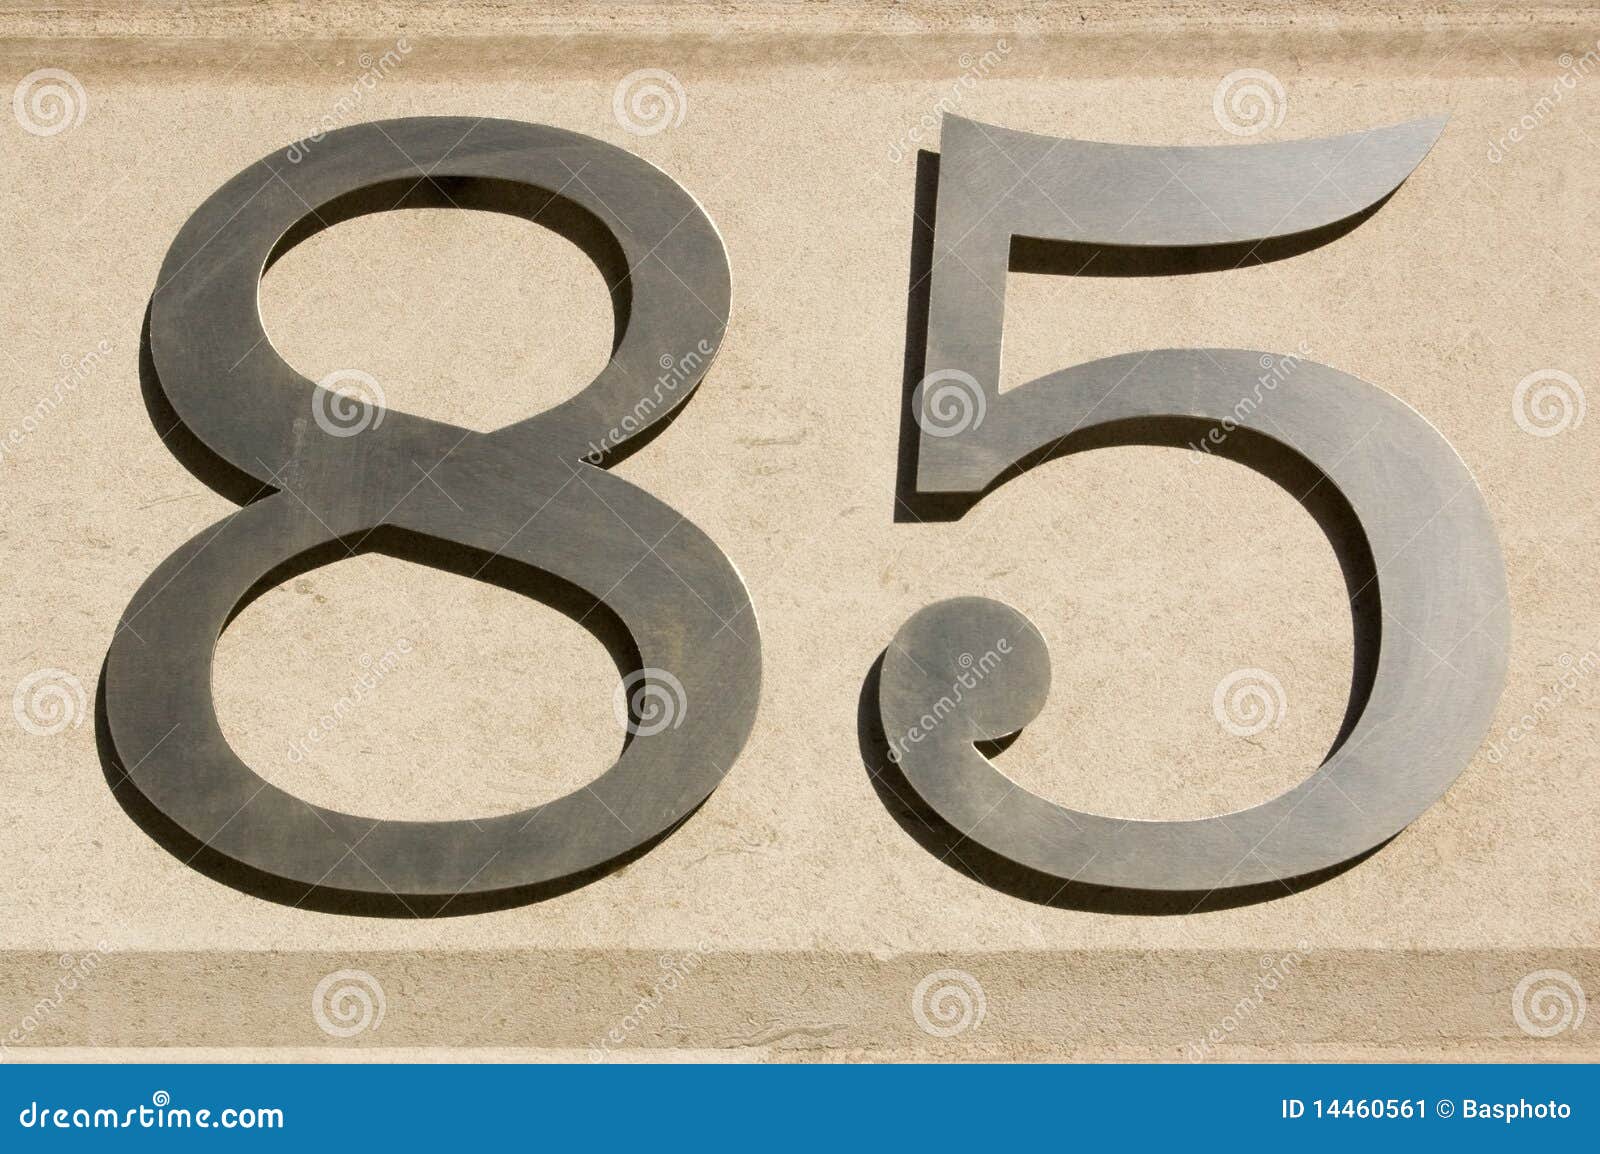 eighty five number